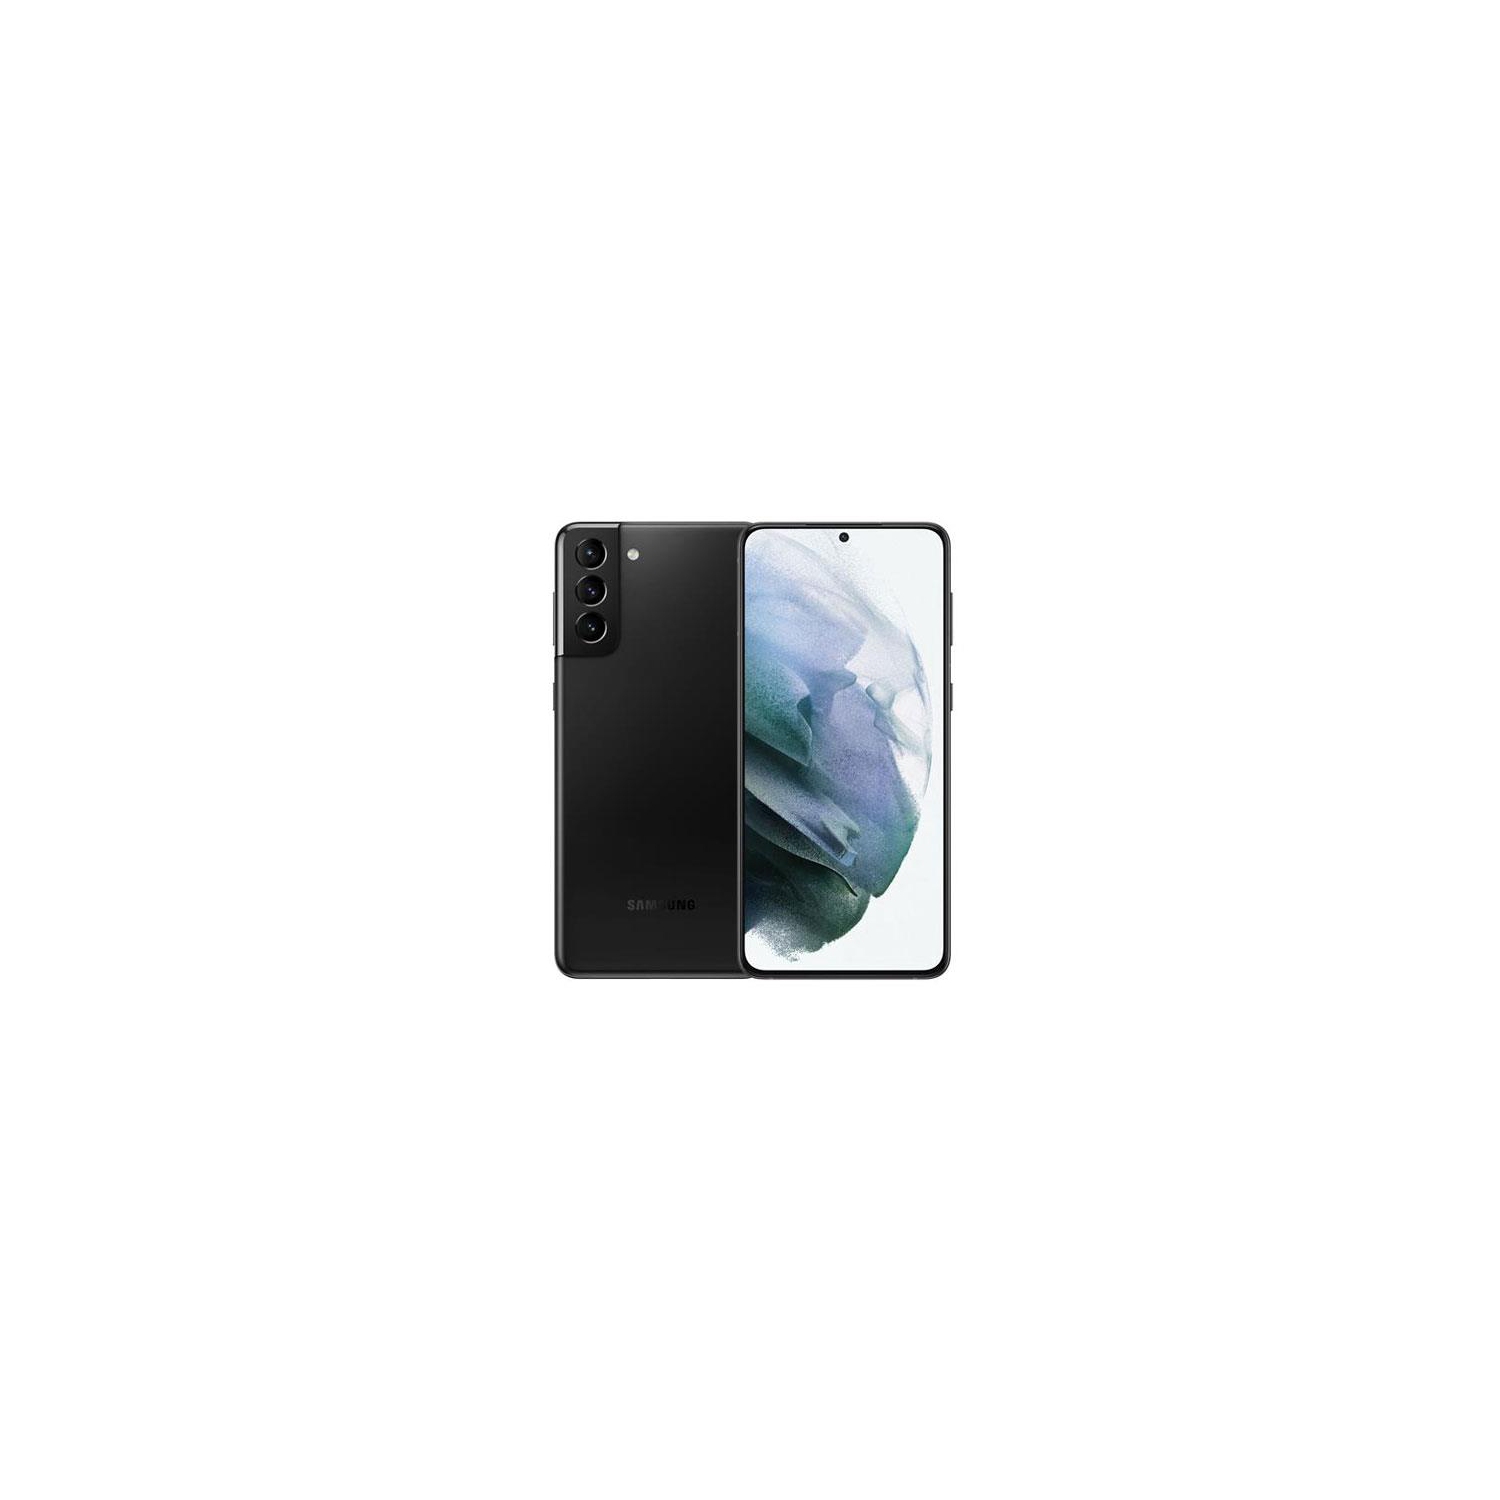 Refurbished (Excellent) - Samsung Galaxy S21 Plus 5G 128GB Smartphone Phantom Black Unlocked (SM-G996WZKAXAC), Refurbished